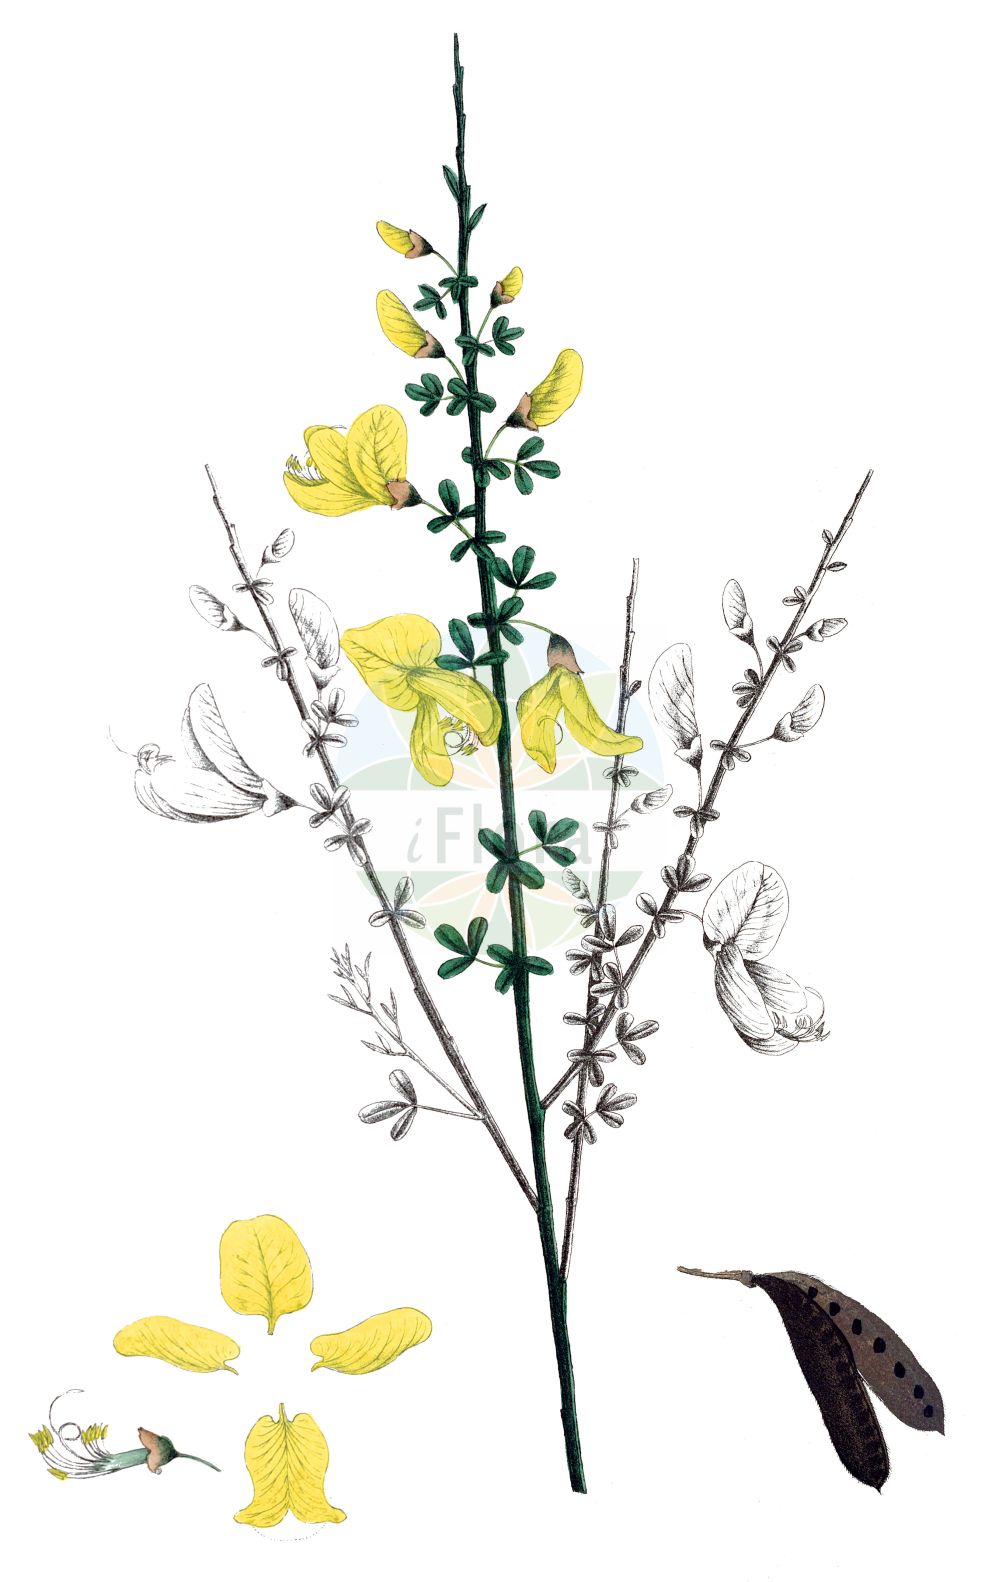 Historische Abbildung von Cytisus scoparius (Besenginster - Broom). Das Bild zeigt Blatt, Bluete, Frucht und Same. ---- Historical Drawing of Cytisus scoparius (Besenginster - Broom). The image is showing leaf, flower, fruit and seed.(Cytisus scoparius,Besenginster,Broom,Cytisus scoparius,Sarothamnus bourgaei,Sarothamnus oxyphyllus,Sarothamnus scoparius,Sarothamnus vulgaris,Spartium scoparium,Besenginster,Besenpfrieme,Gewoehnlicher Besenginster,Ramse,Broom,Prostrate Broom,Scotch Broom,Common Broom,English Broom,Scottish Broom,Cytisus,Geißklee,Broom,Fabaceae,Schmetterlingsblütler,Pea family,Blatt,Bluete,Frucht,Same,leaf,flower,fruit,seed,Krebs (1826-1832))